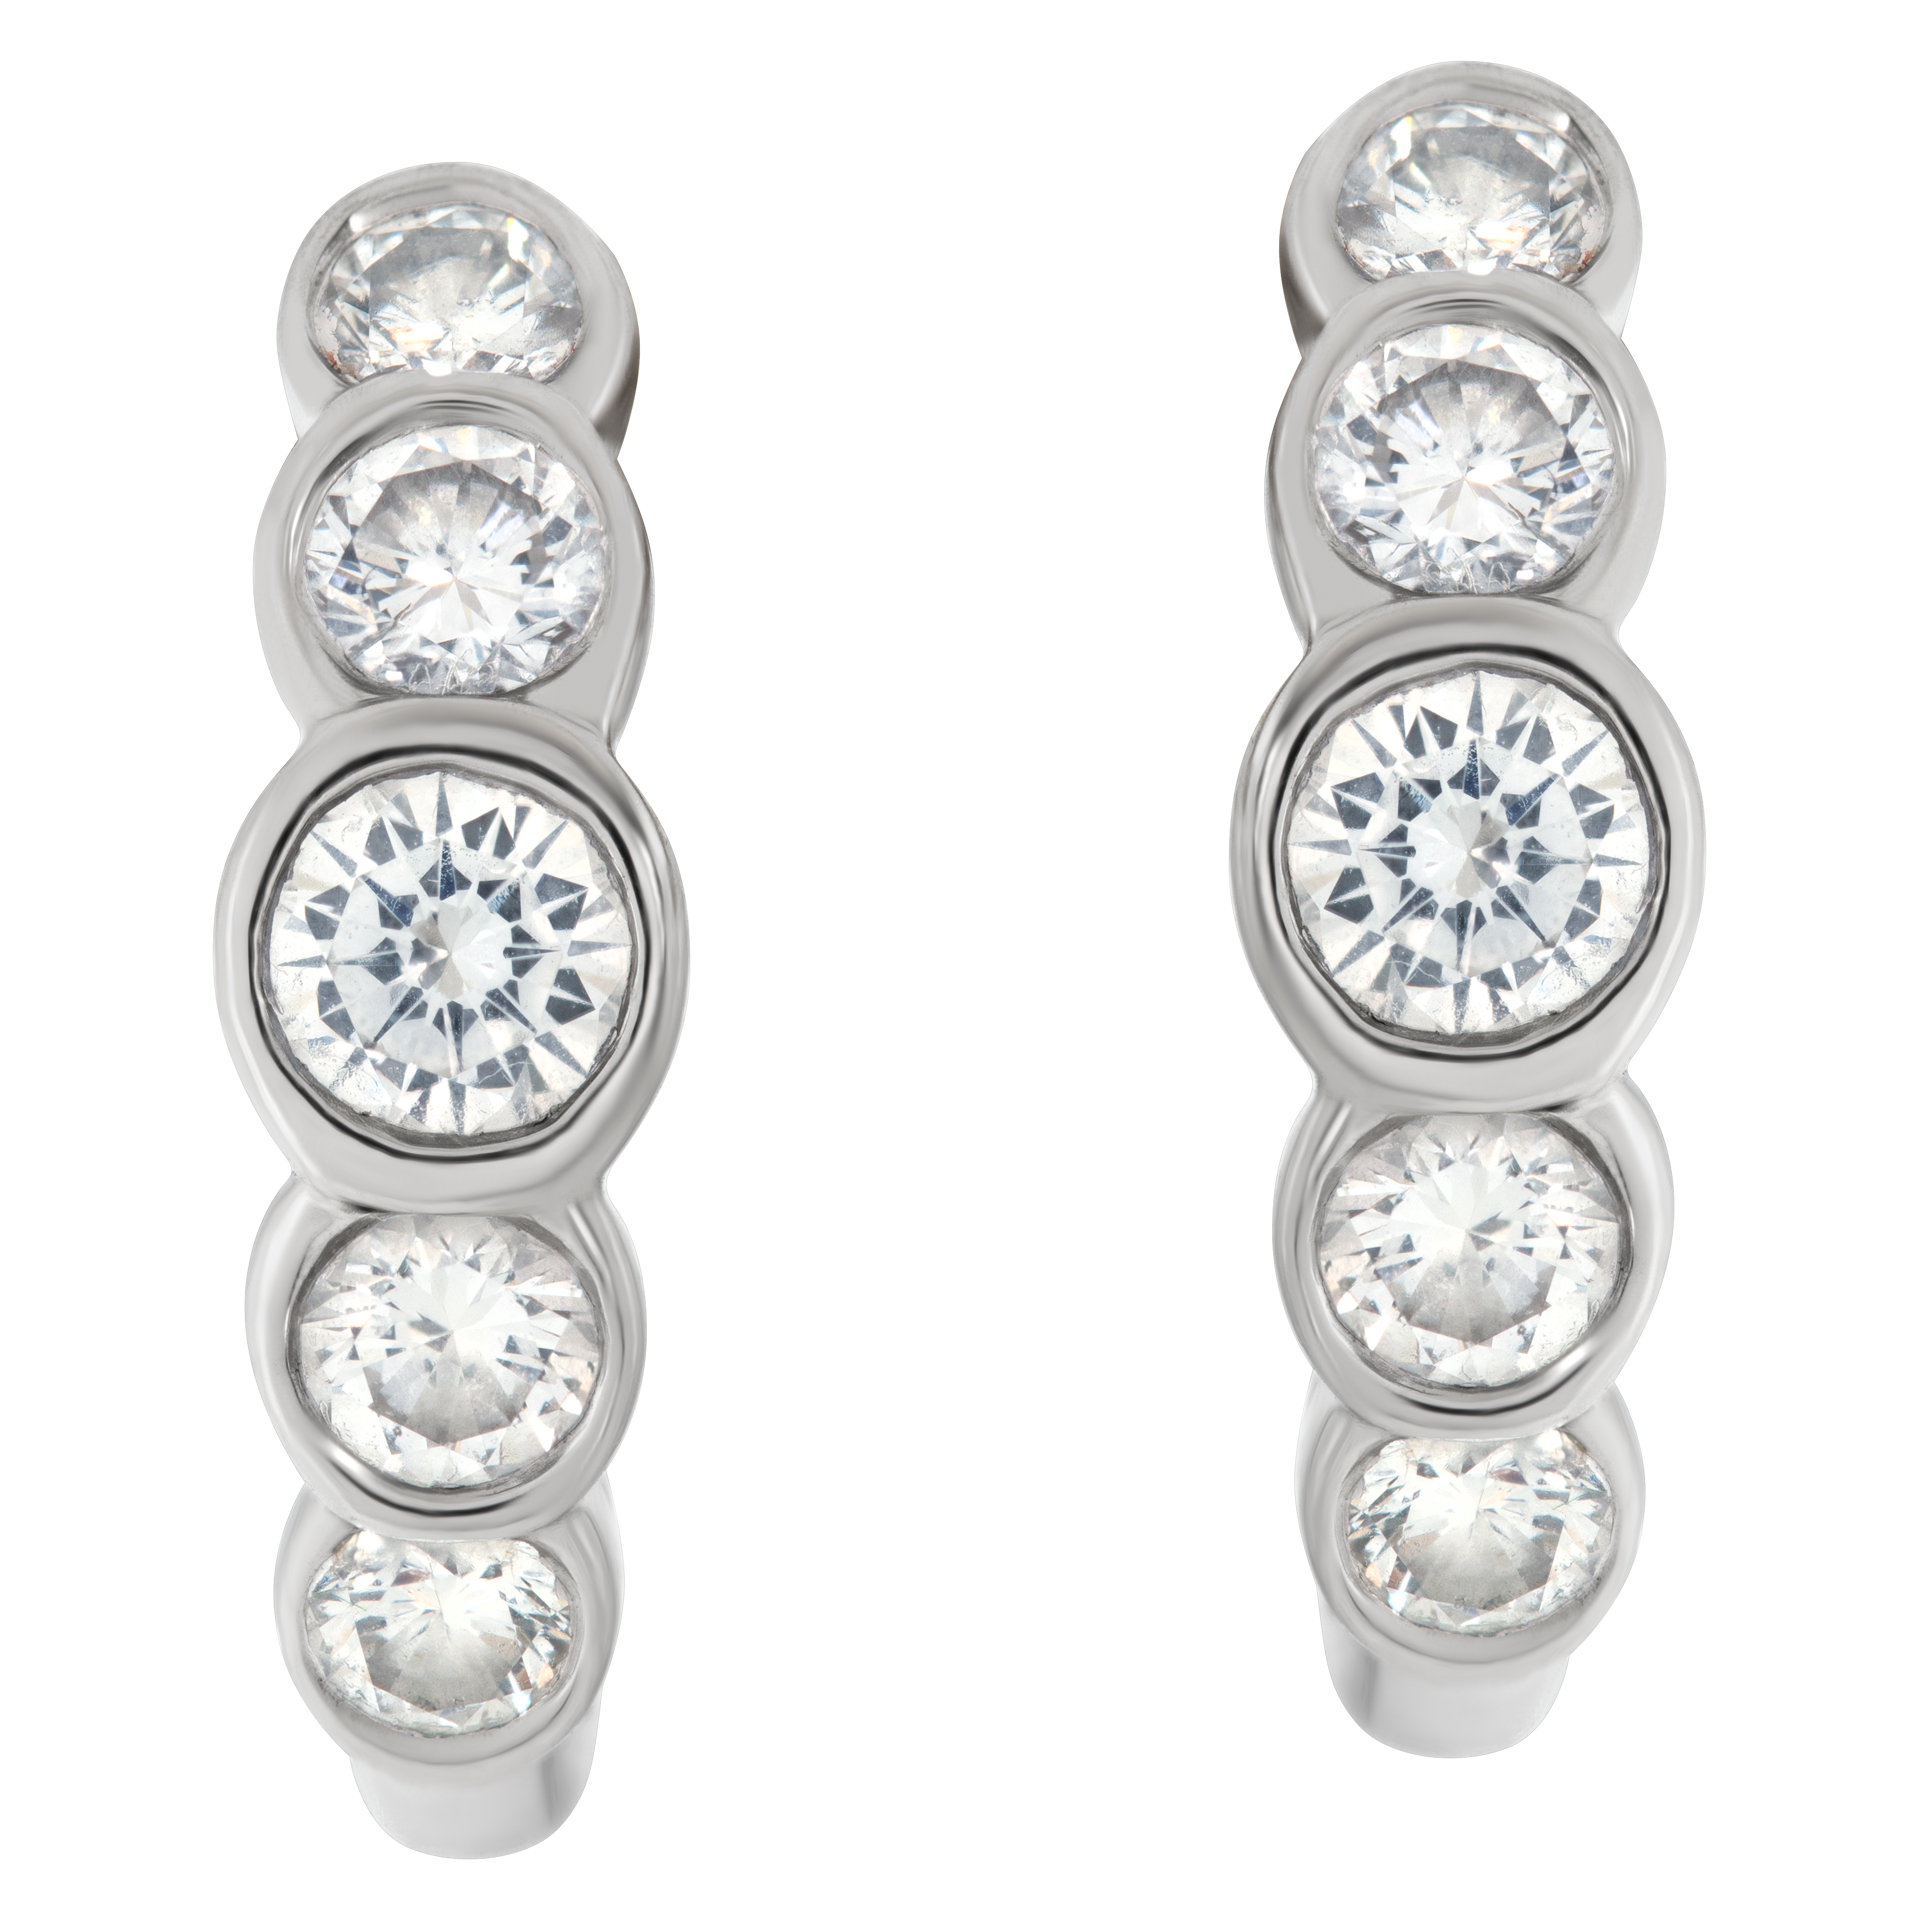 Ladies five stone diamond earrigns in 14k white gold